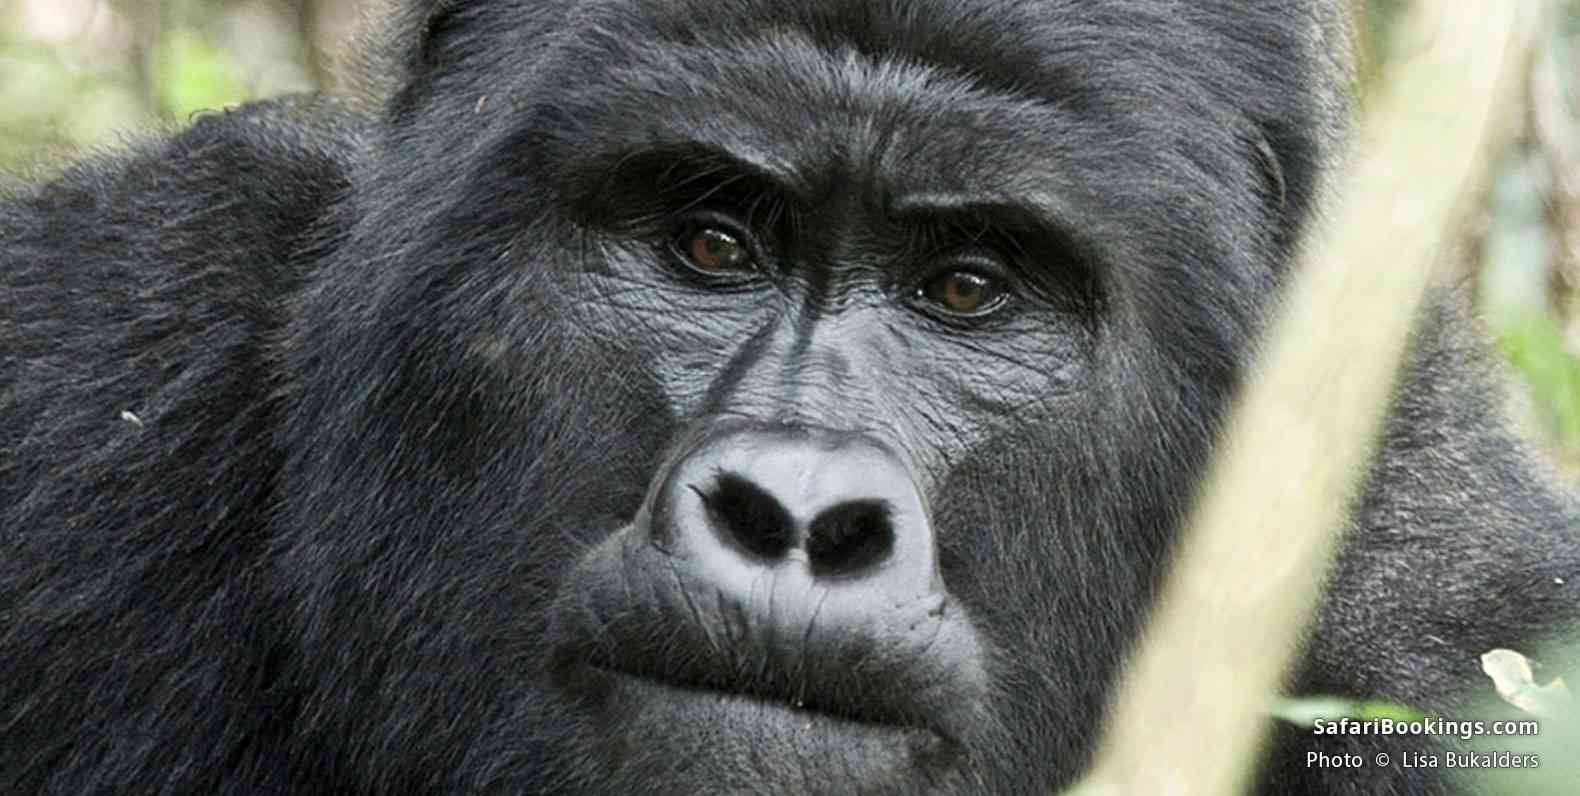 Silverback mountain gorilla